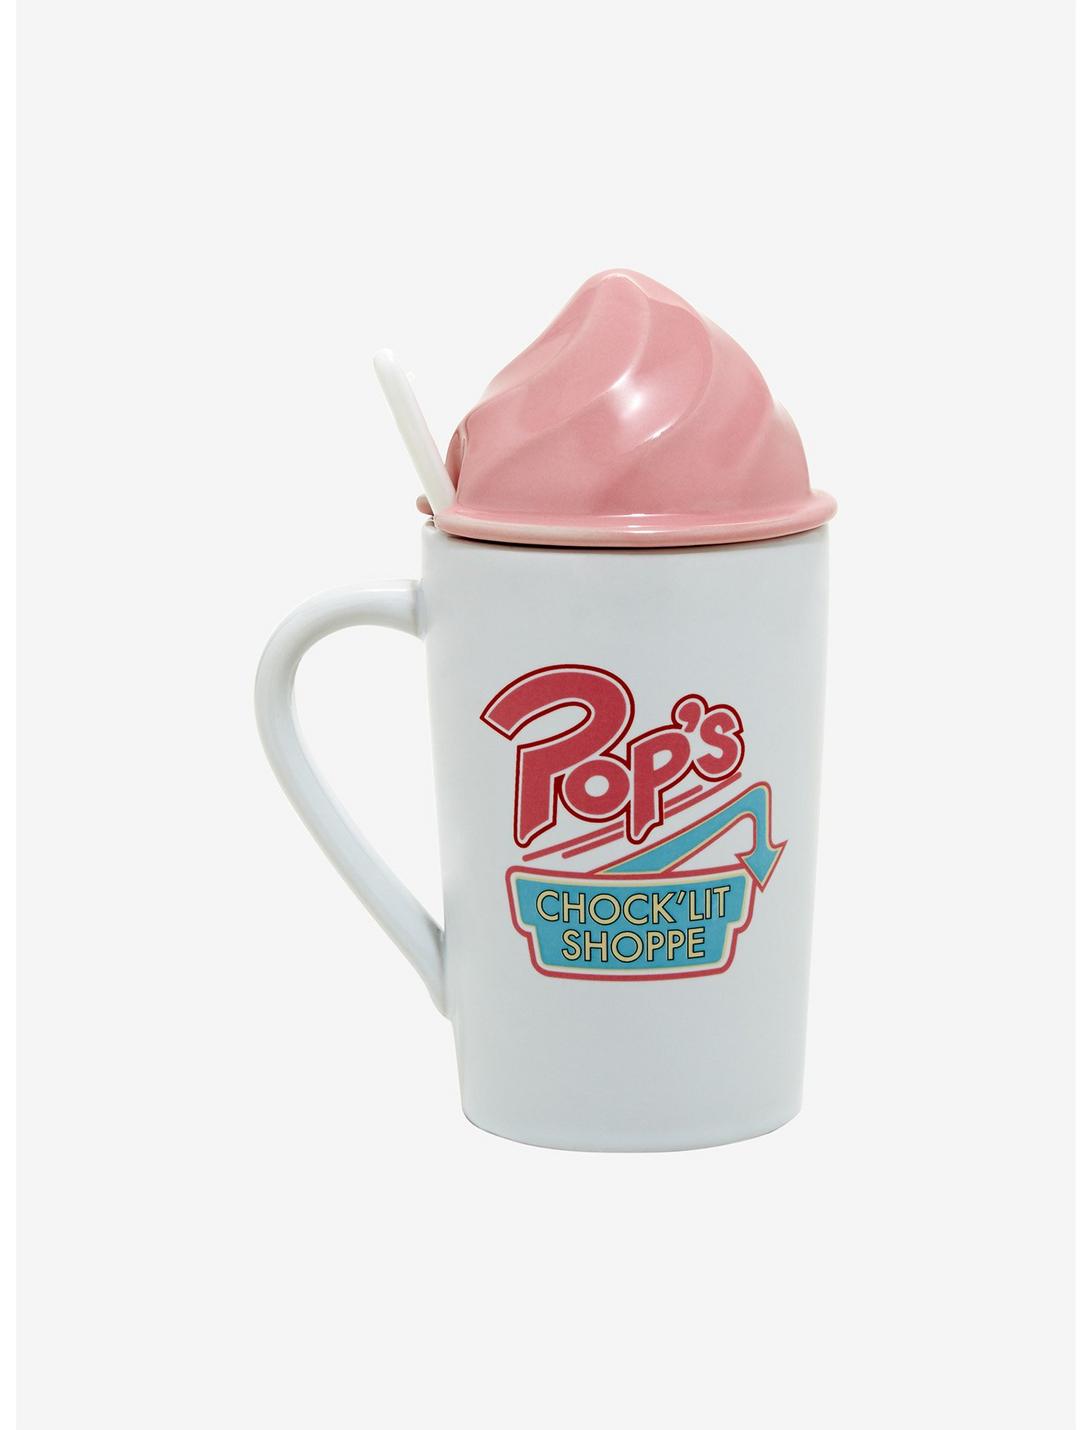 Riverdale Pop's Chock'Lit Shoppe Milkshake Mug With Lid & Spoon Hot Topic Exclusive, , hi-res